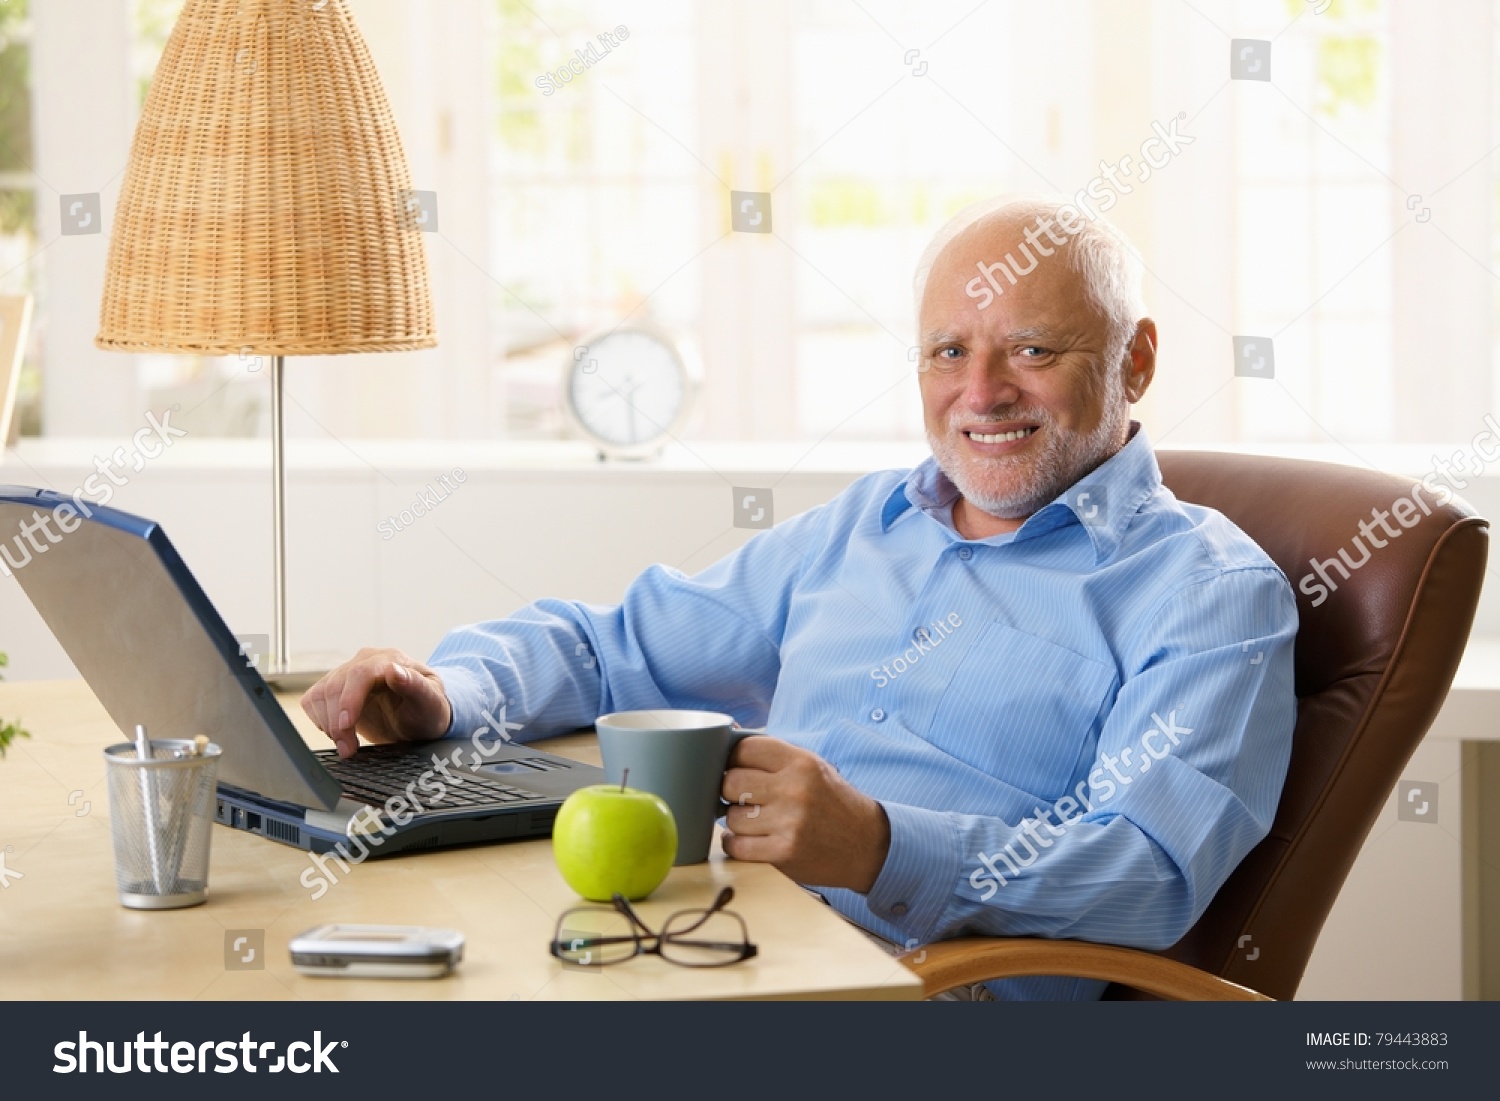 stock-photo-portrait-of-happy-senior-man-sitting-at-desk-using-laptop-computer-at-home-smiling-at-camera-79443883.jpg